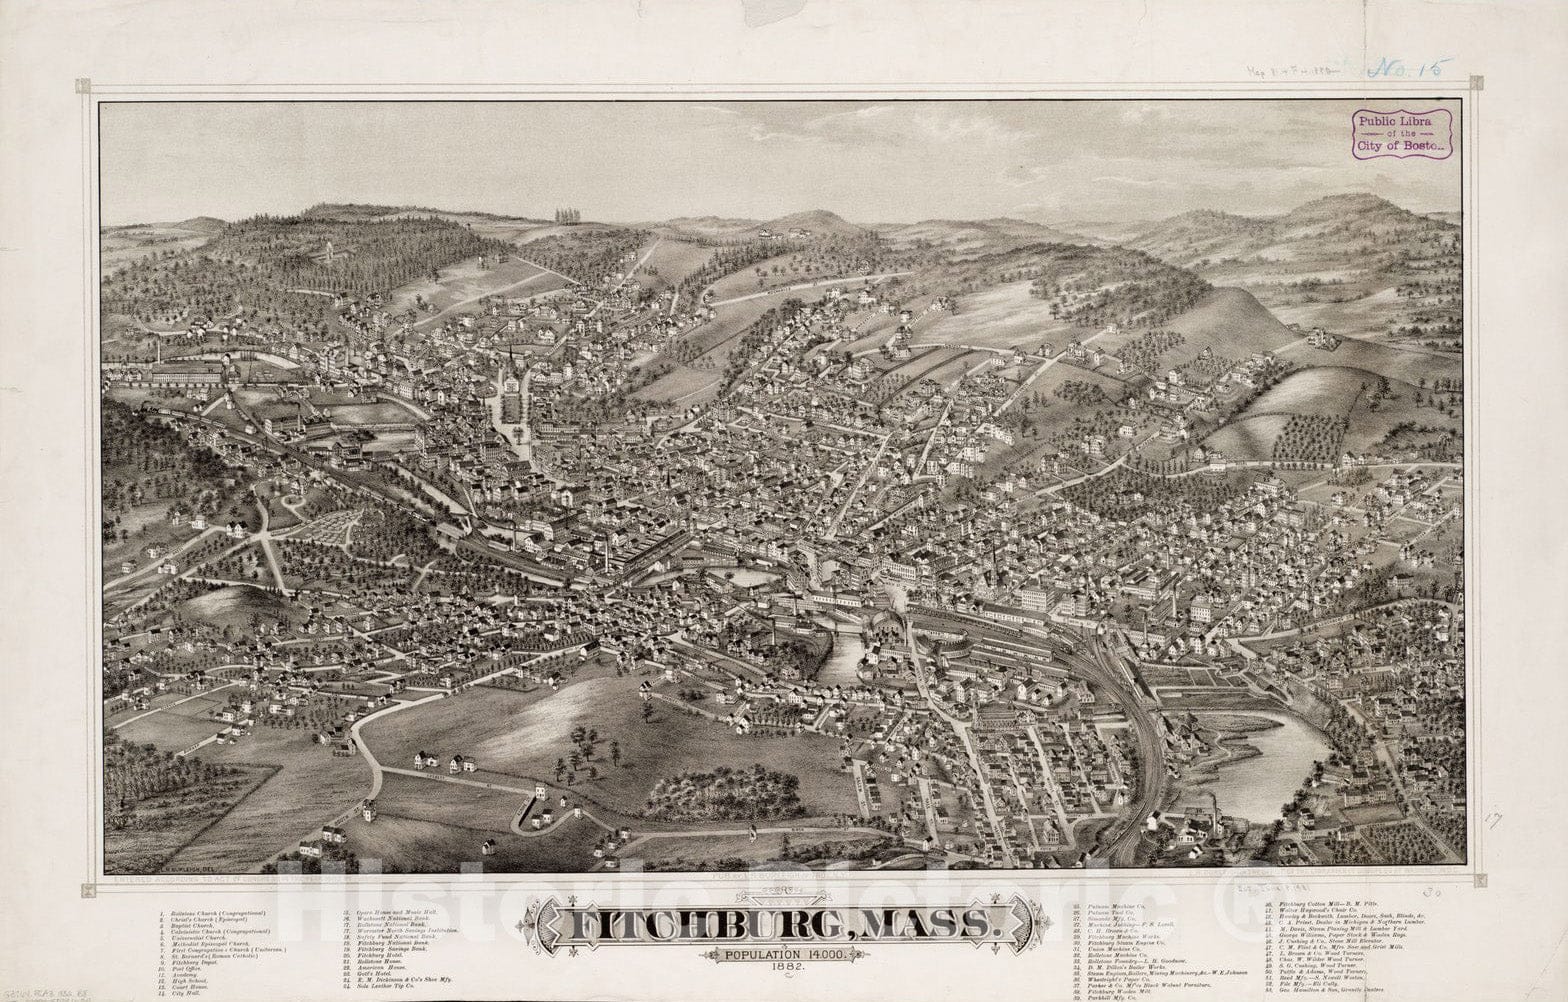 Historical Map, Fitchburg, Mass : Population 14,000, 1882, Vintage Wall Art